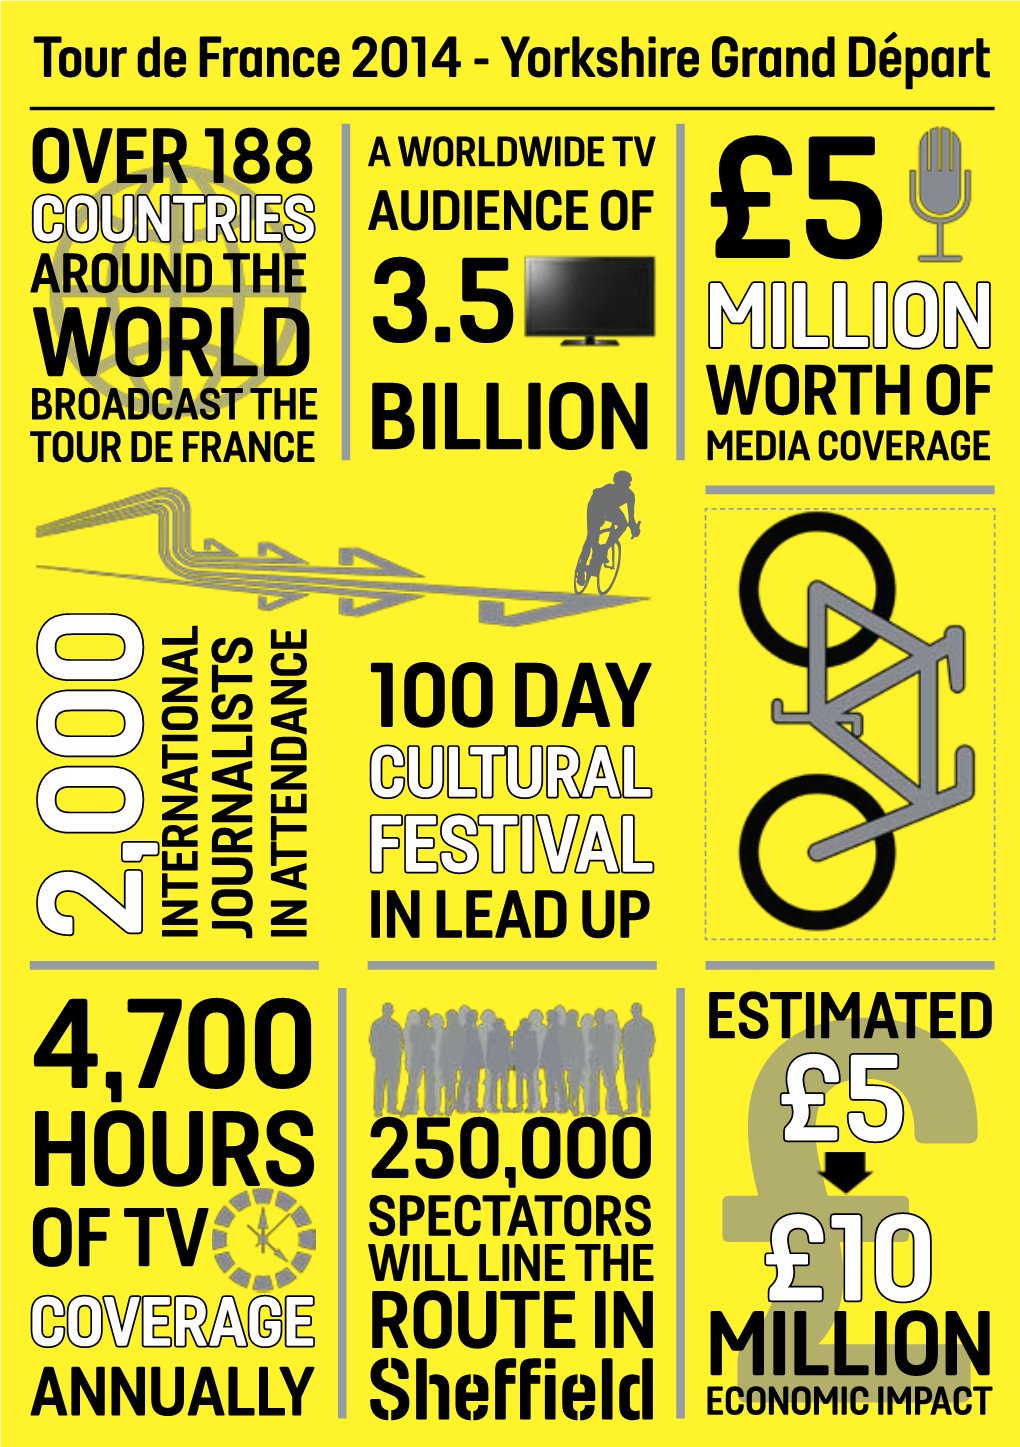 £5 World 3.5 Million Broadcast the Worth of Tour De France Billion Media Coverage